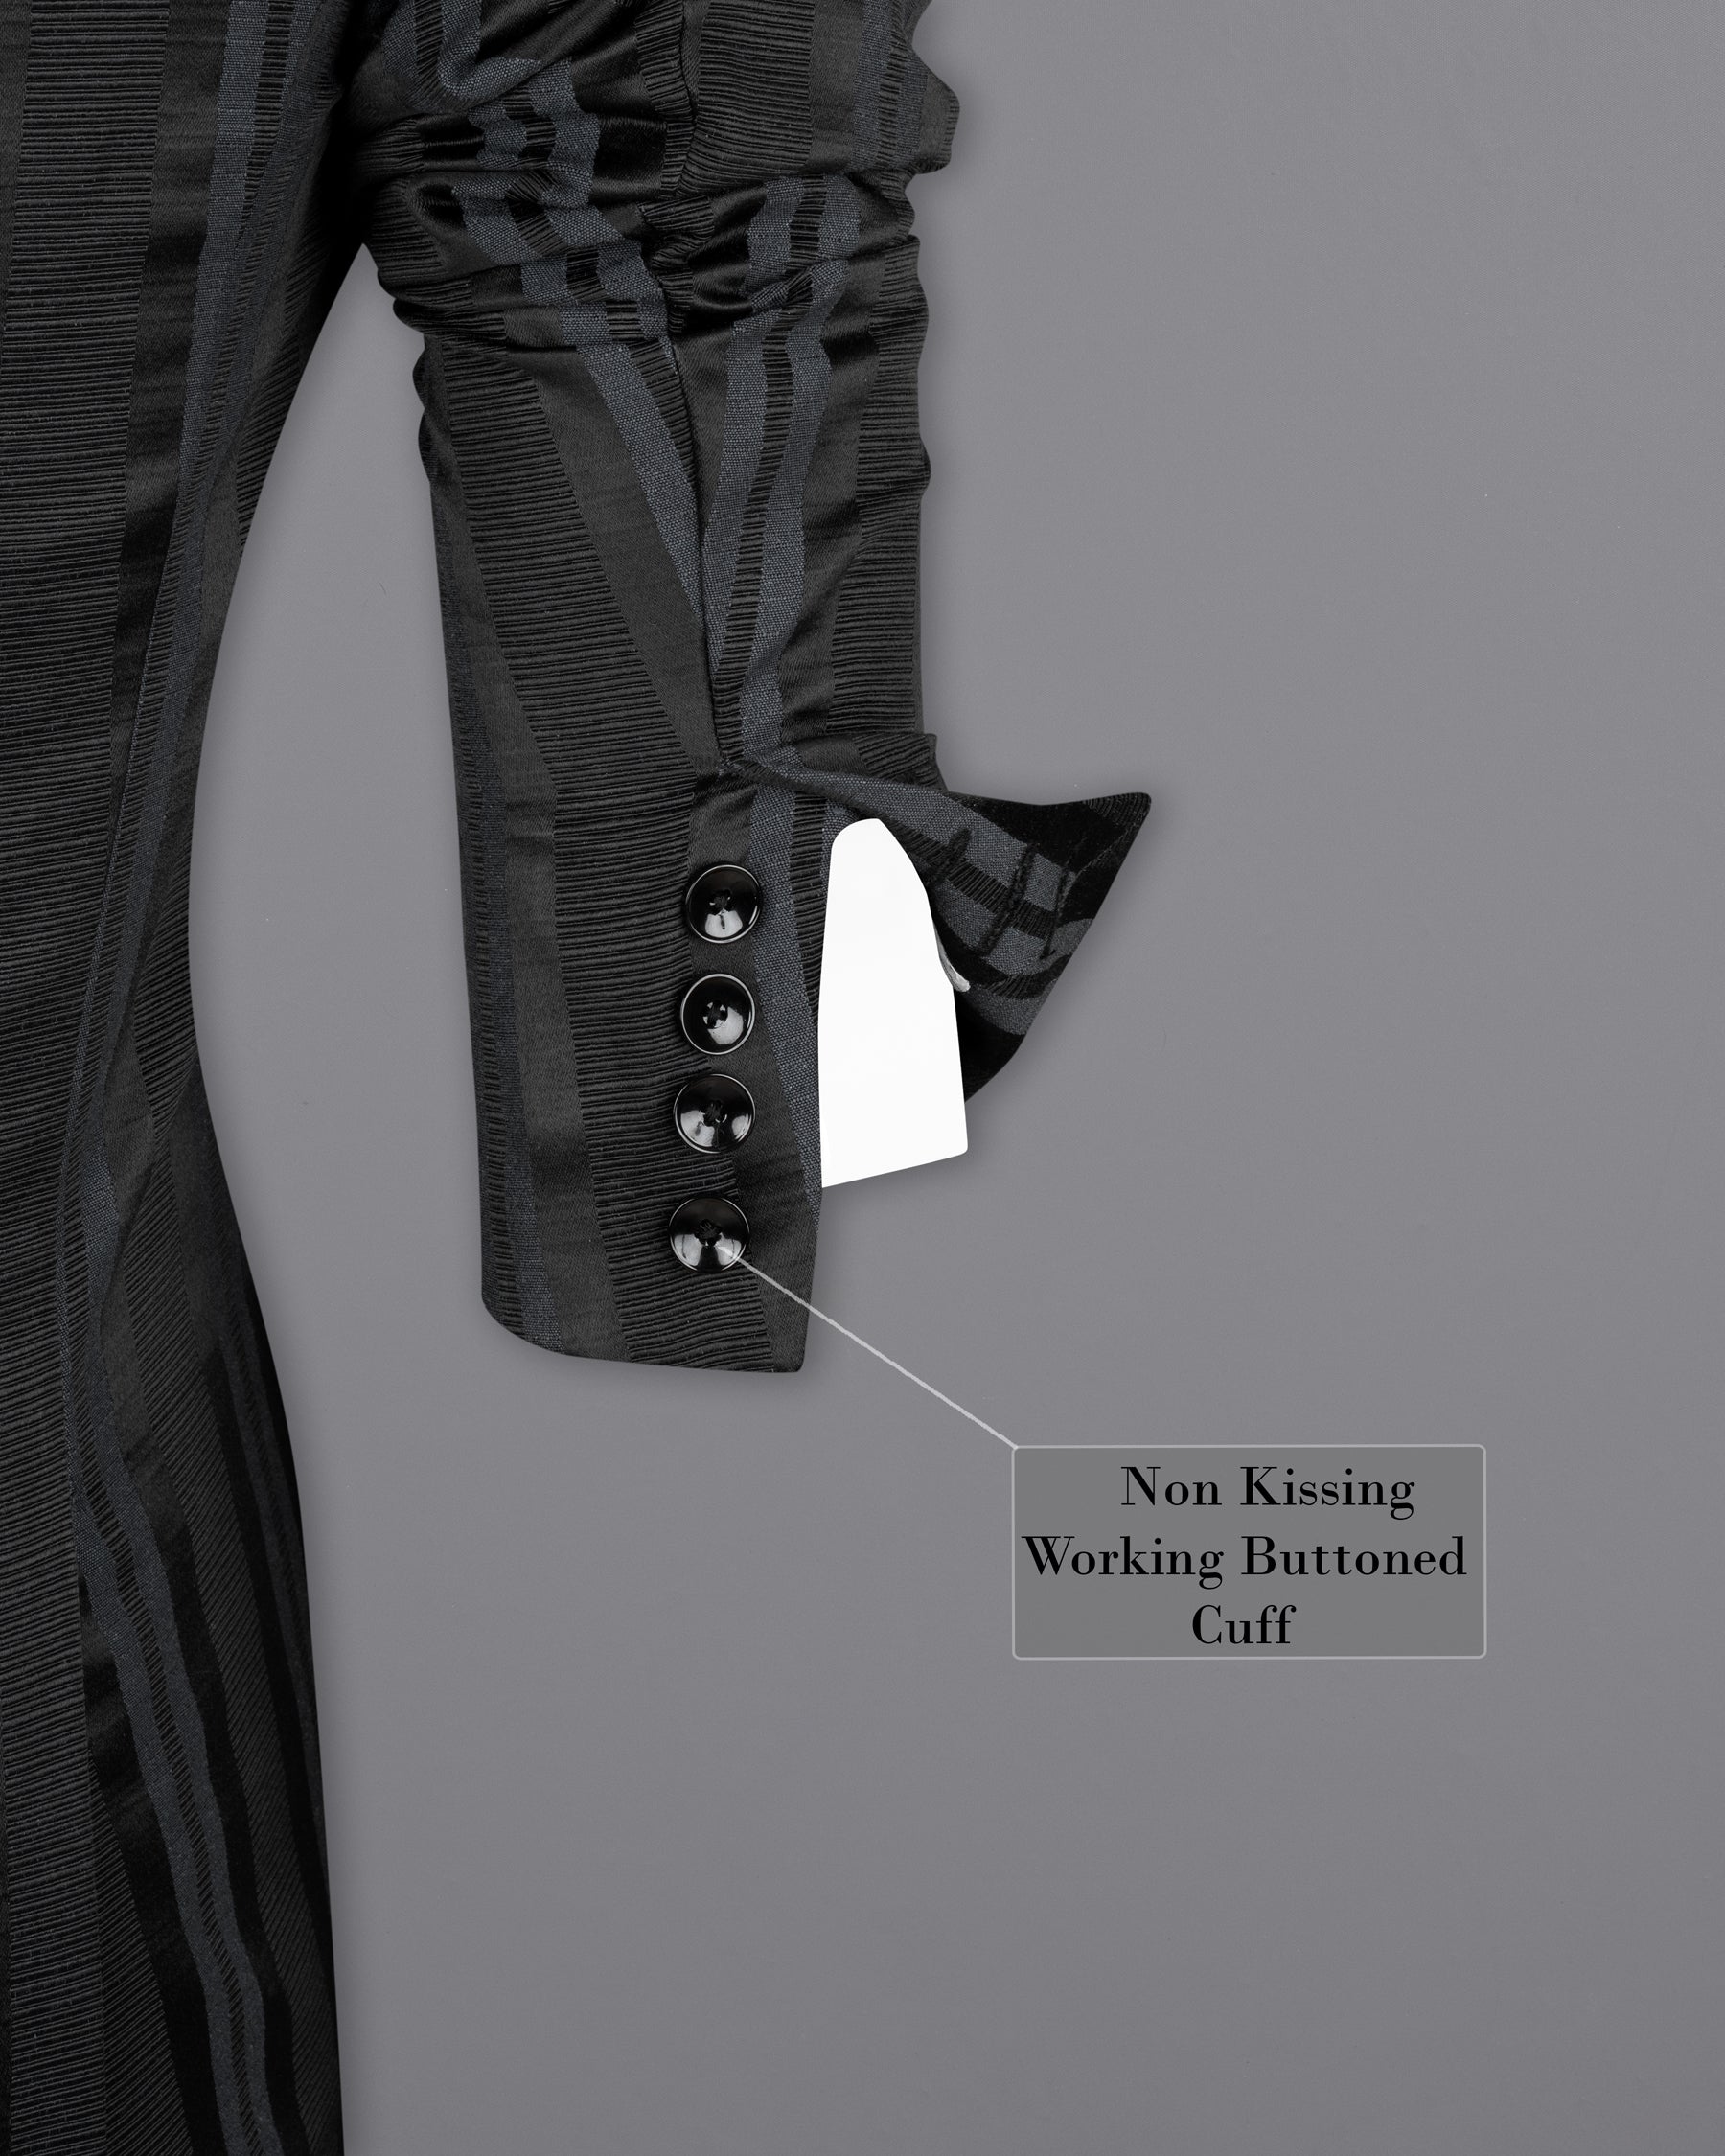 Jade Black with Arsenic Gray Striped Jacquard Textured Premium Cotton Designer Blazer